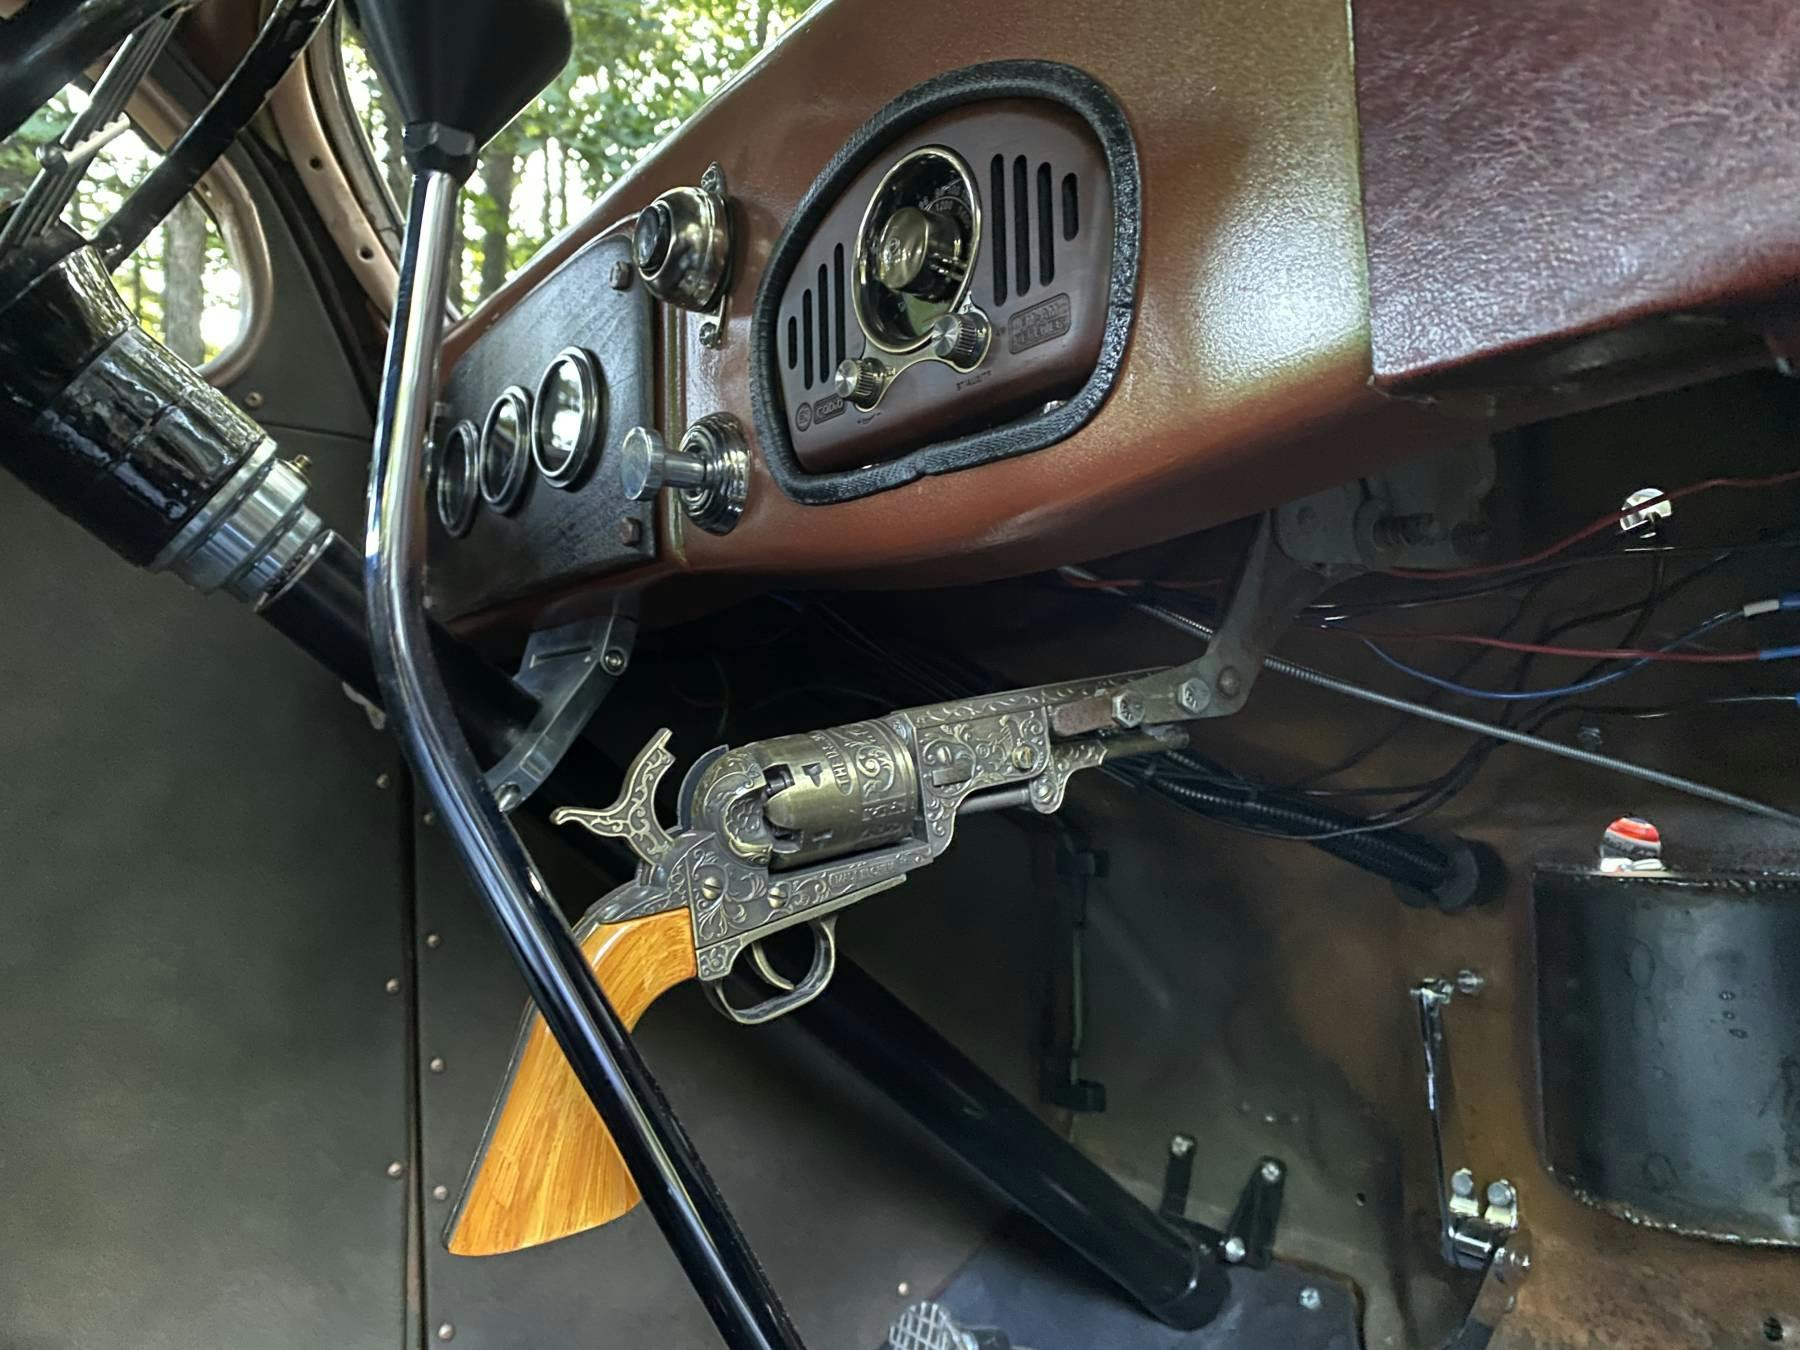 1937 Ford Model 78 Slantback Tudor Hot Rod pistol grip